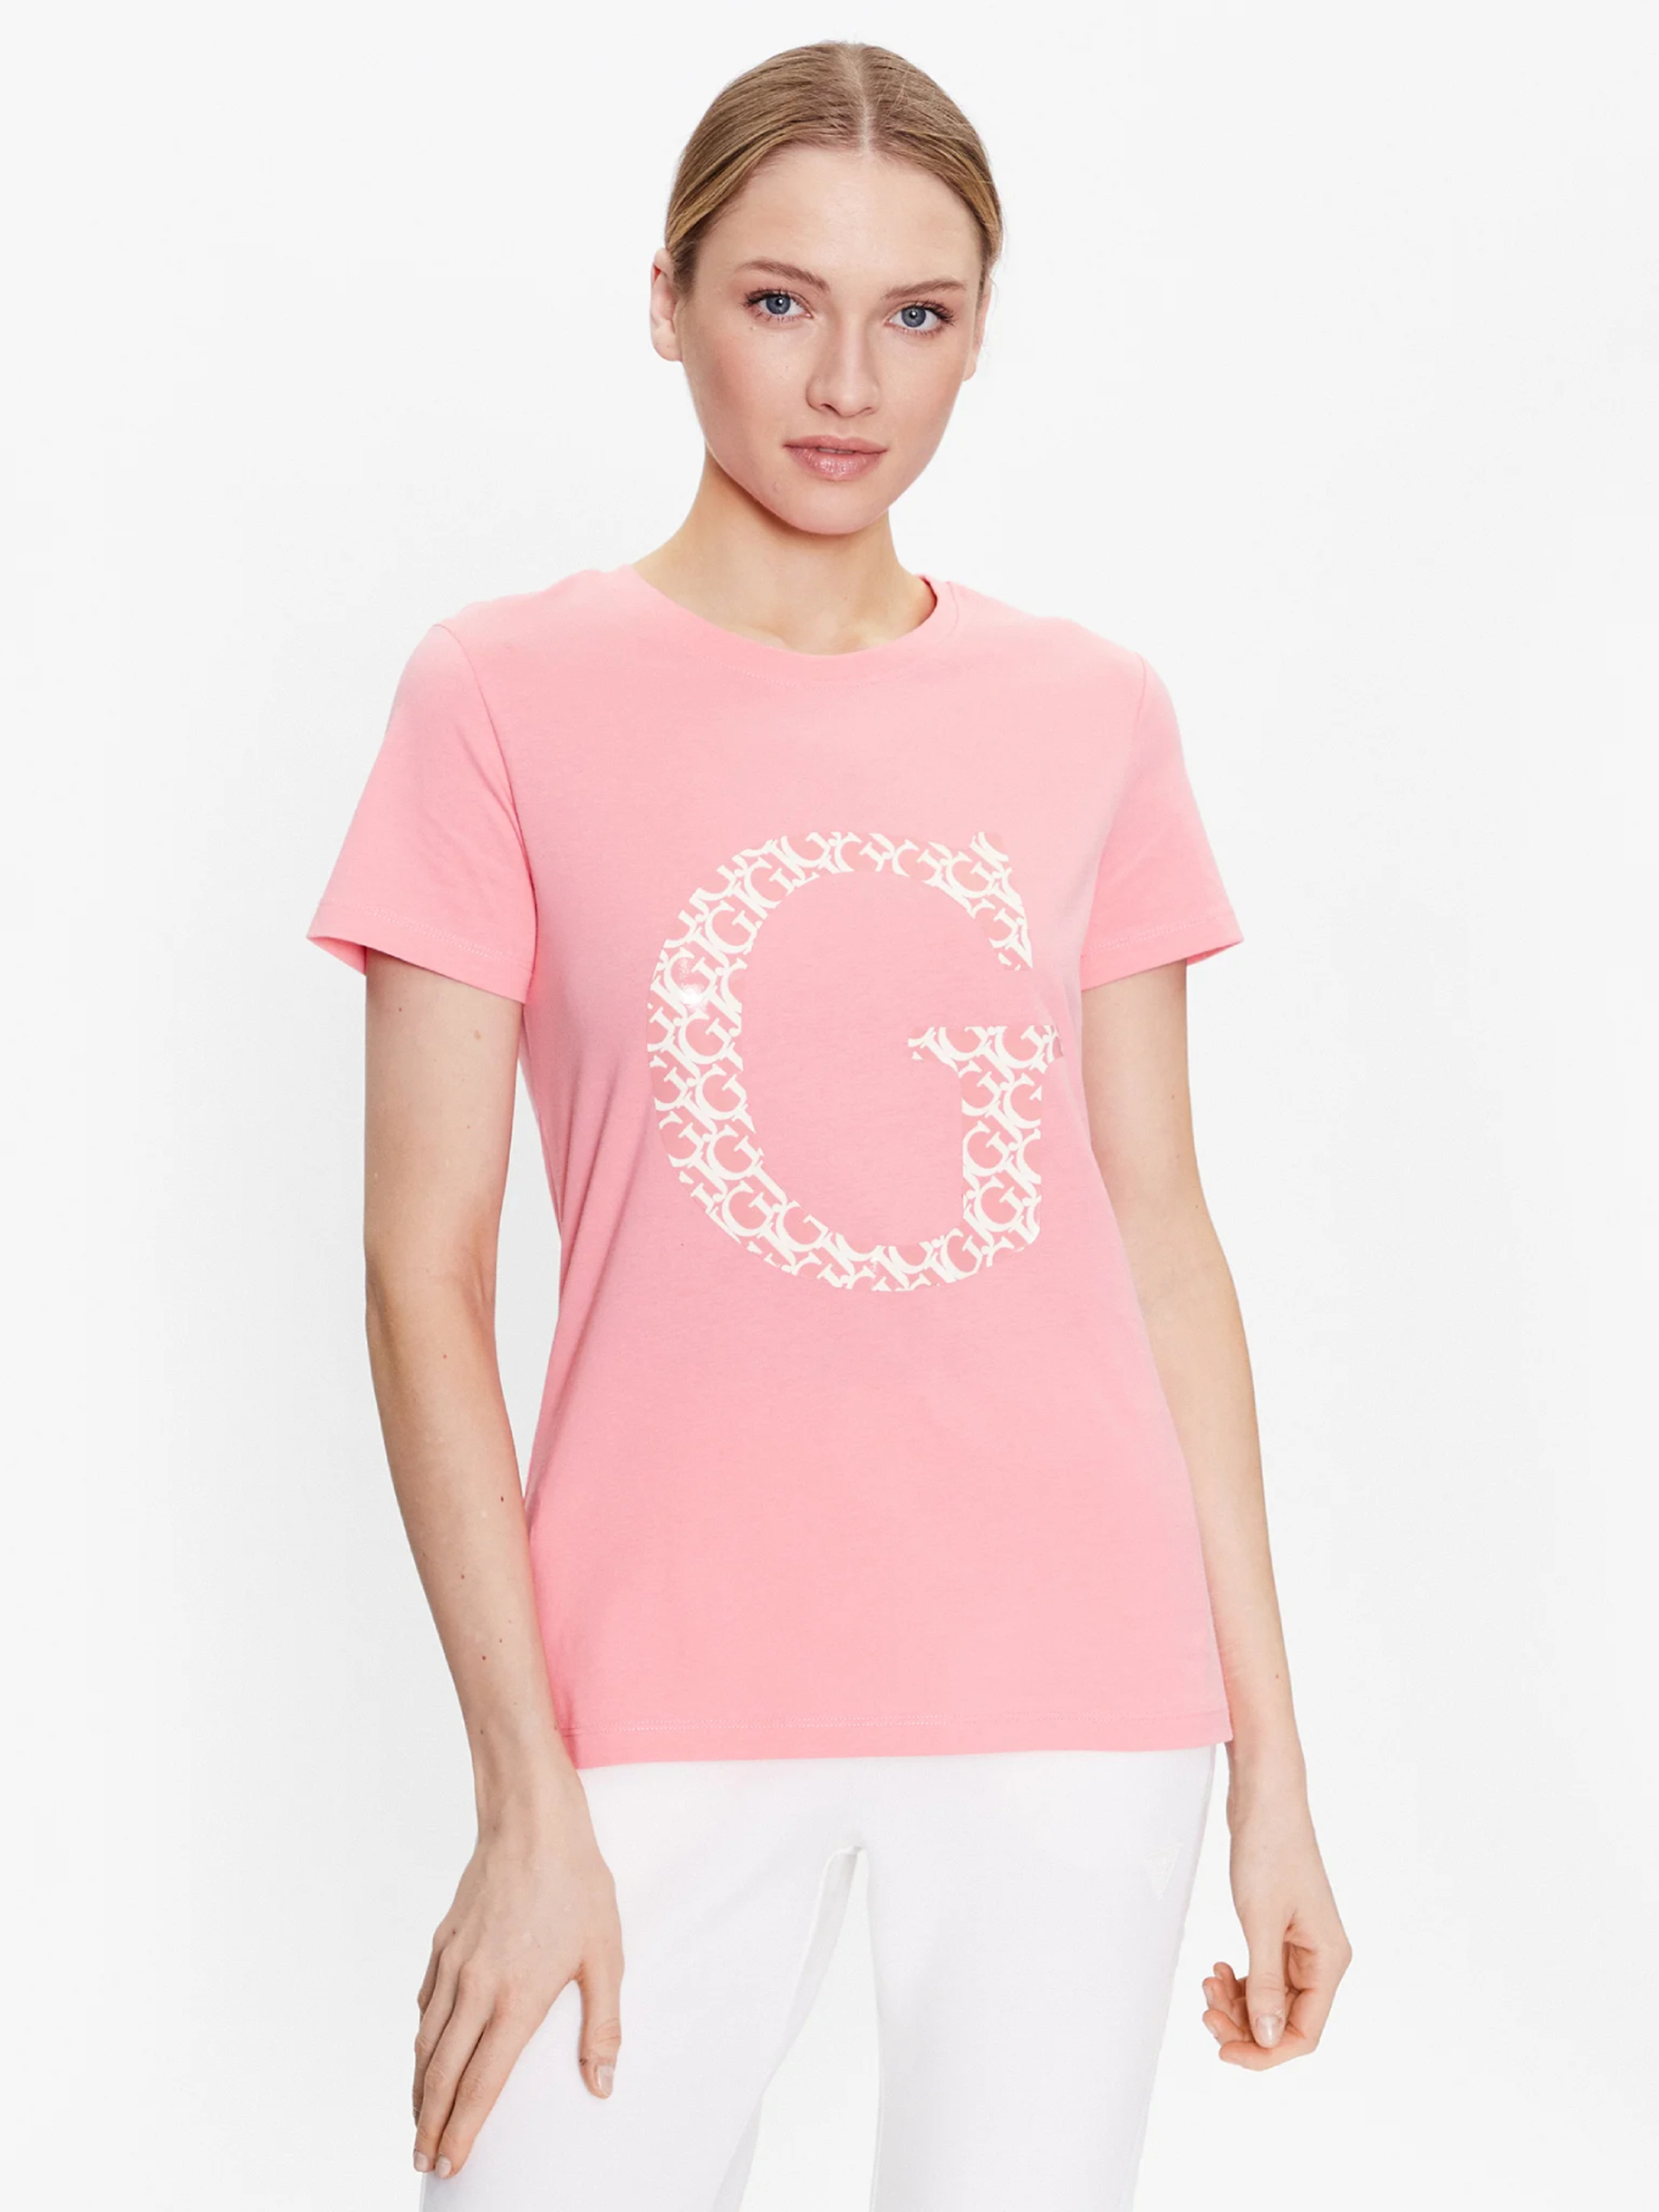 Guess dámské růžové tričko - S (G67R)